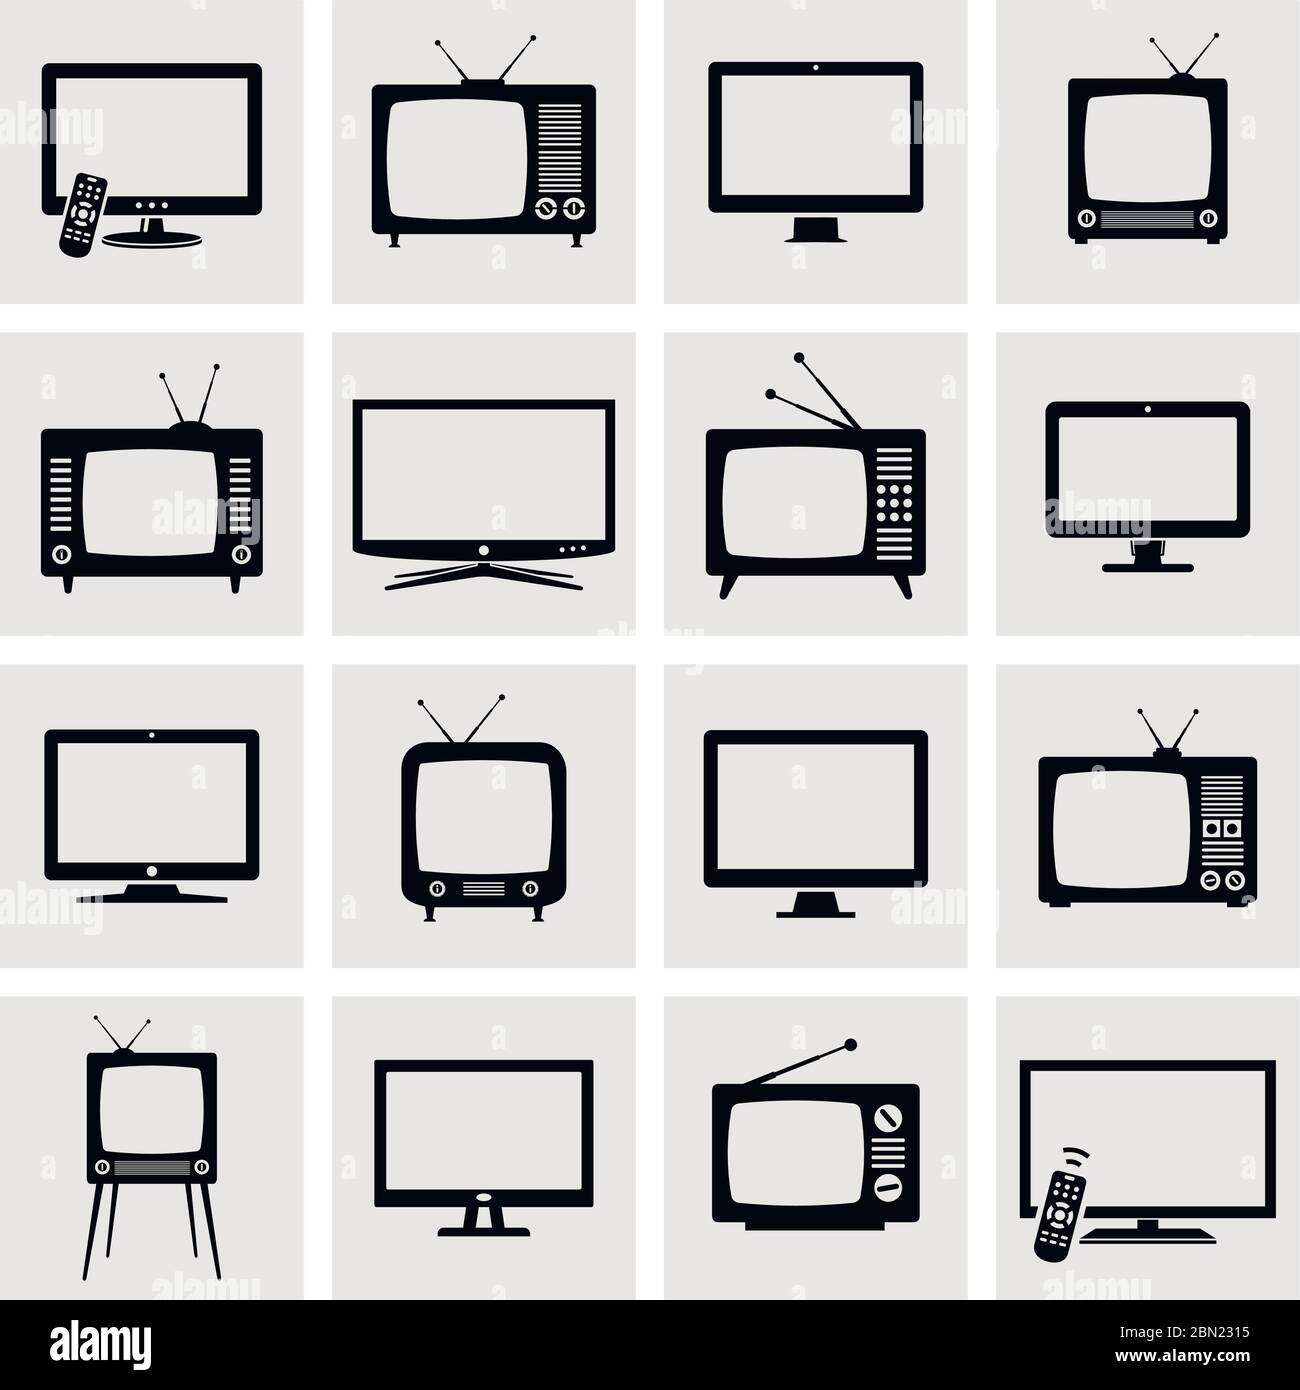 TV screens icons set Stock Vector